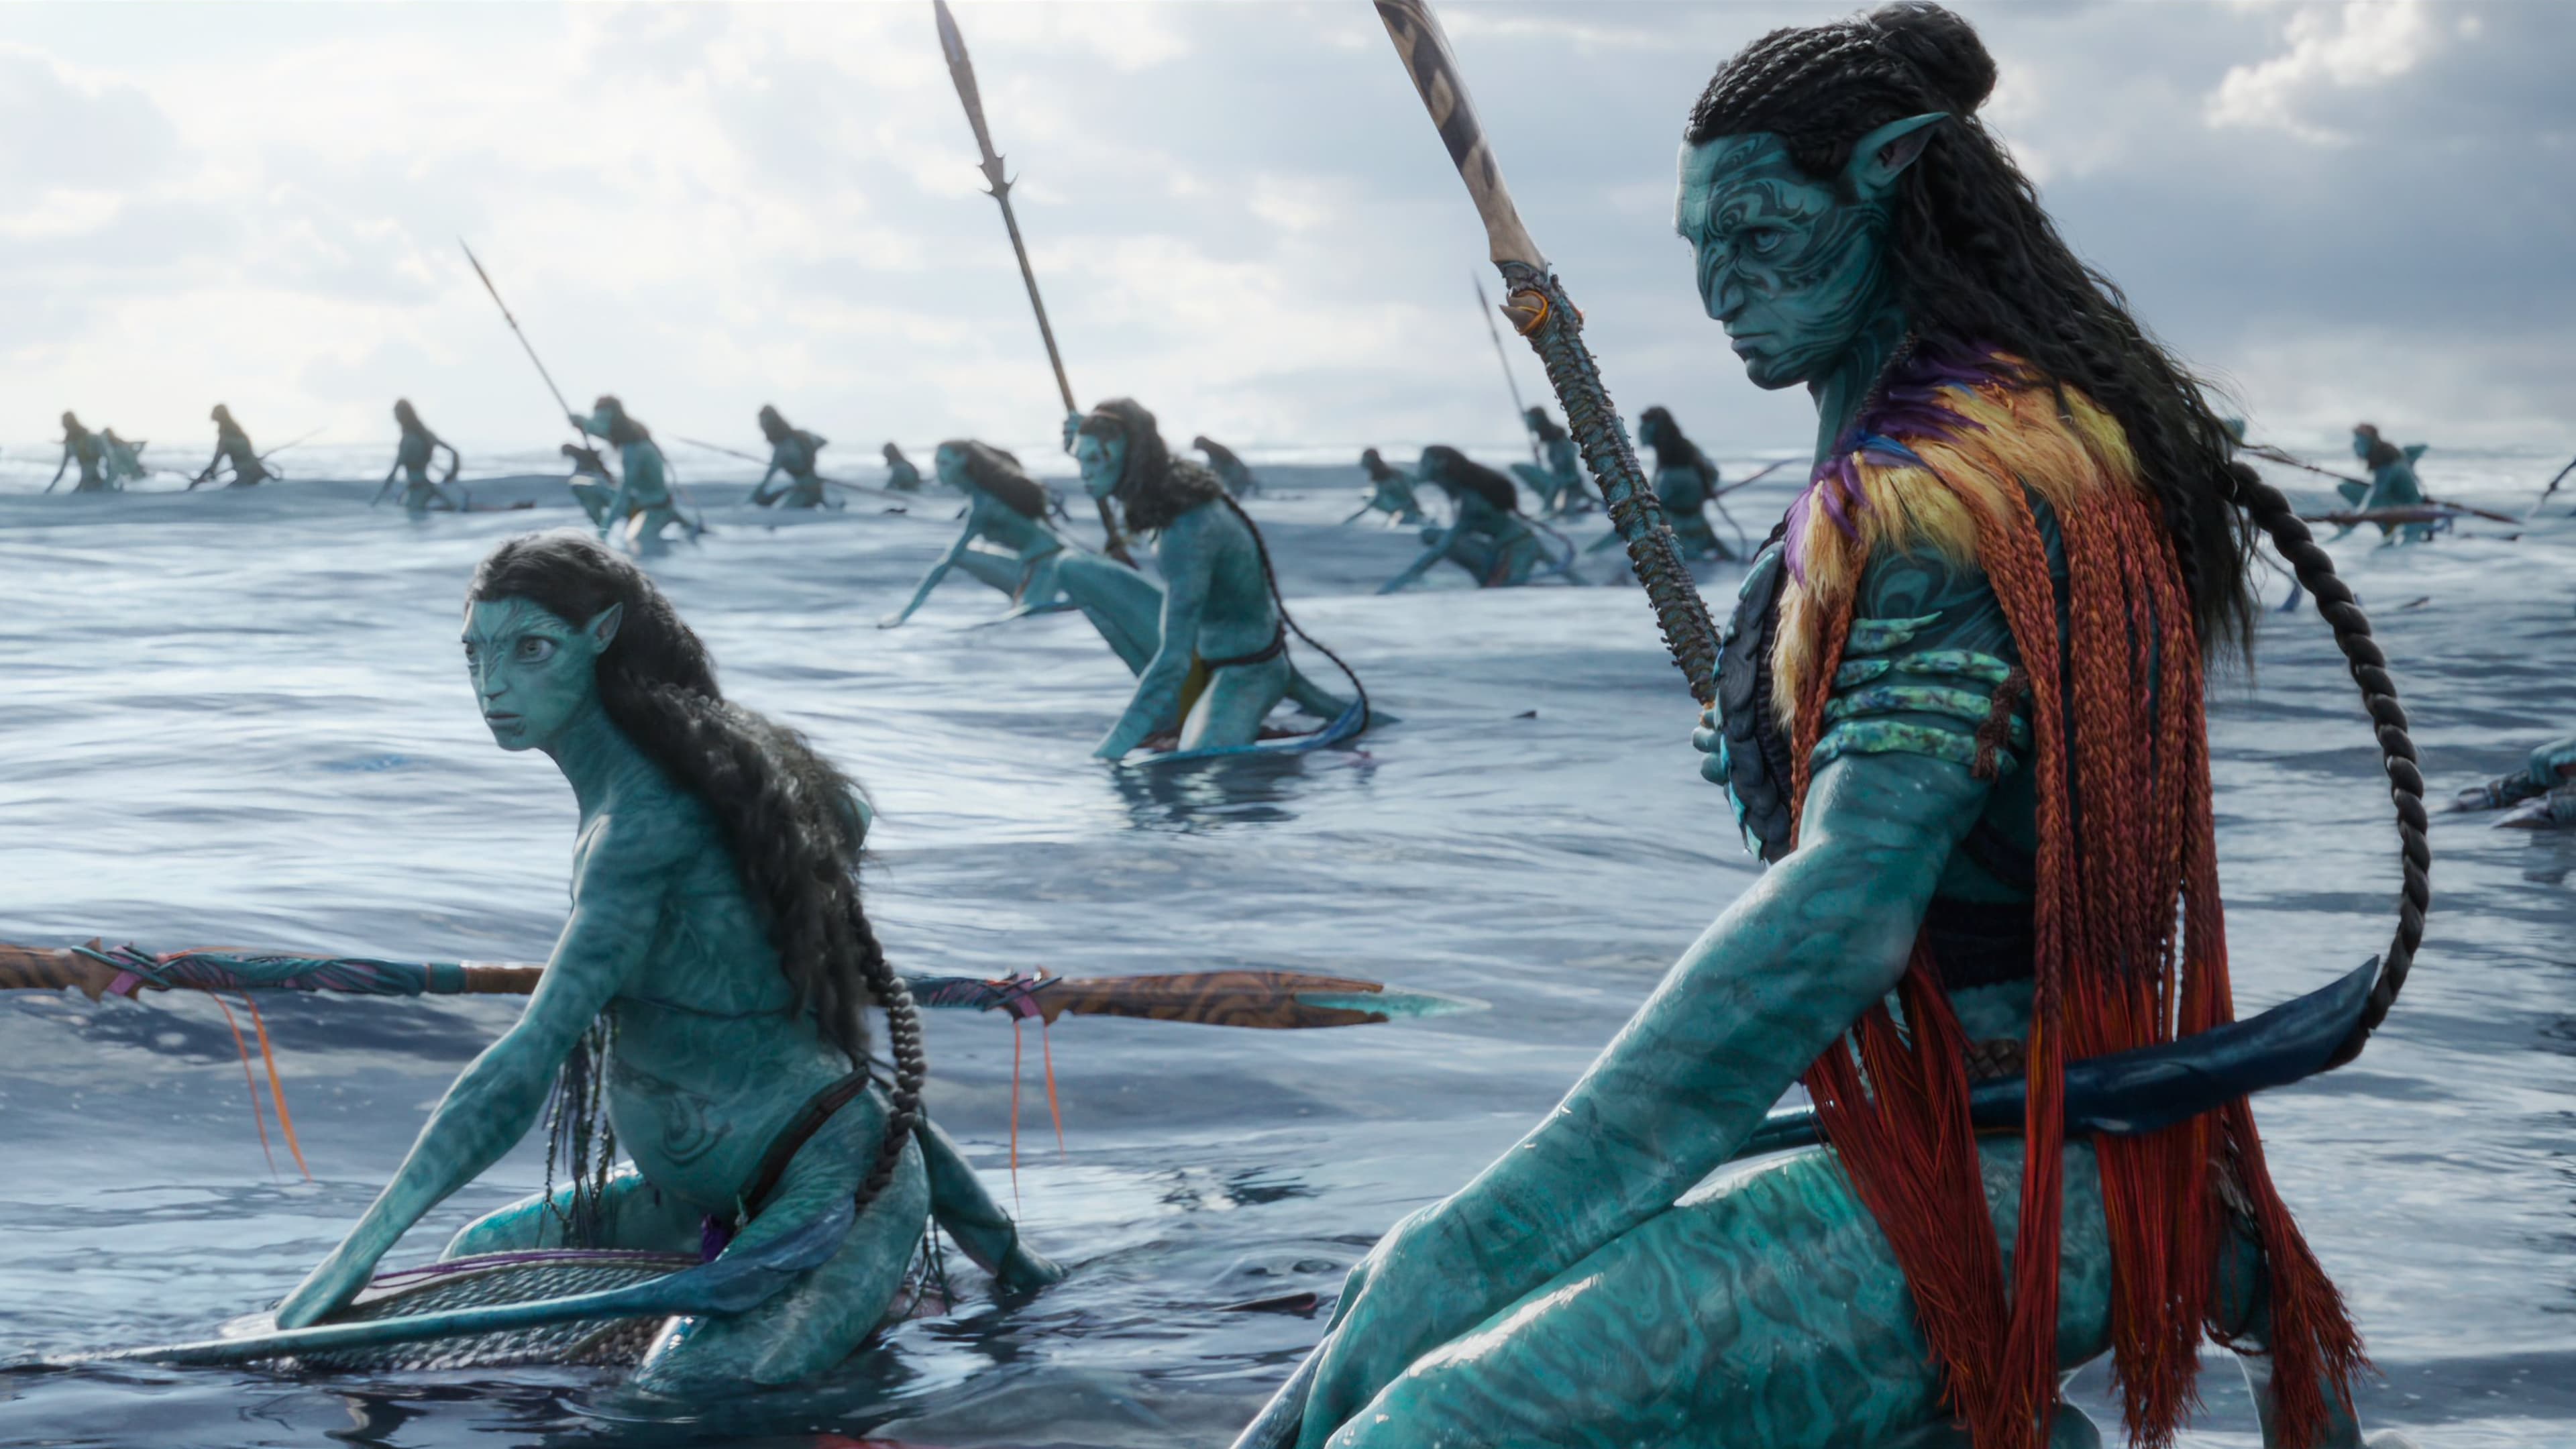 Avatar: Cesta vody (2022)